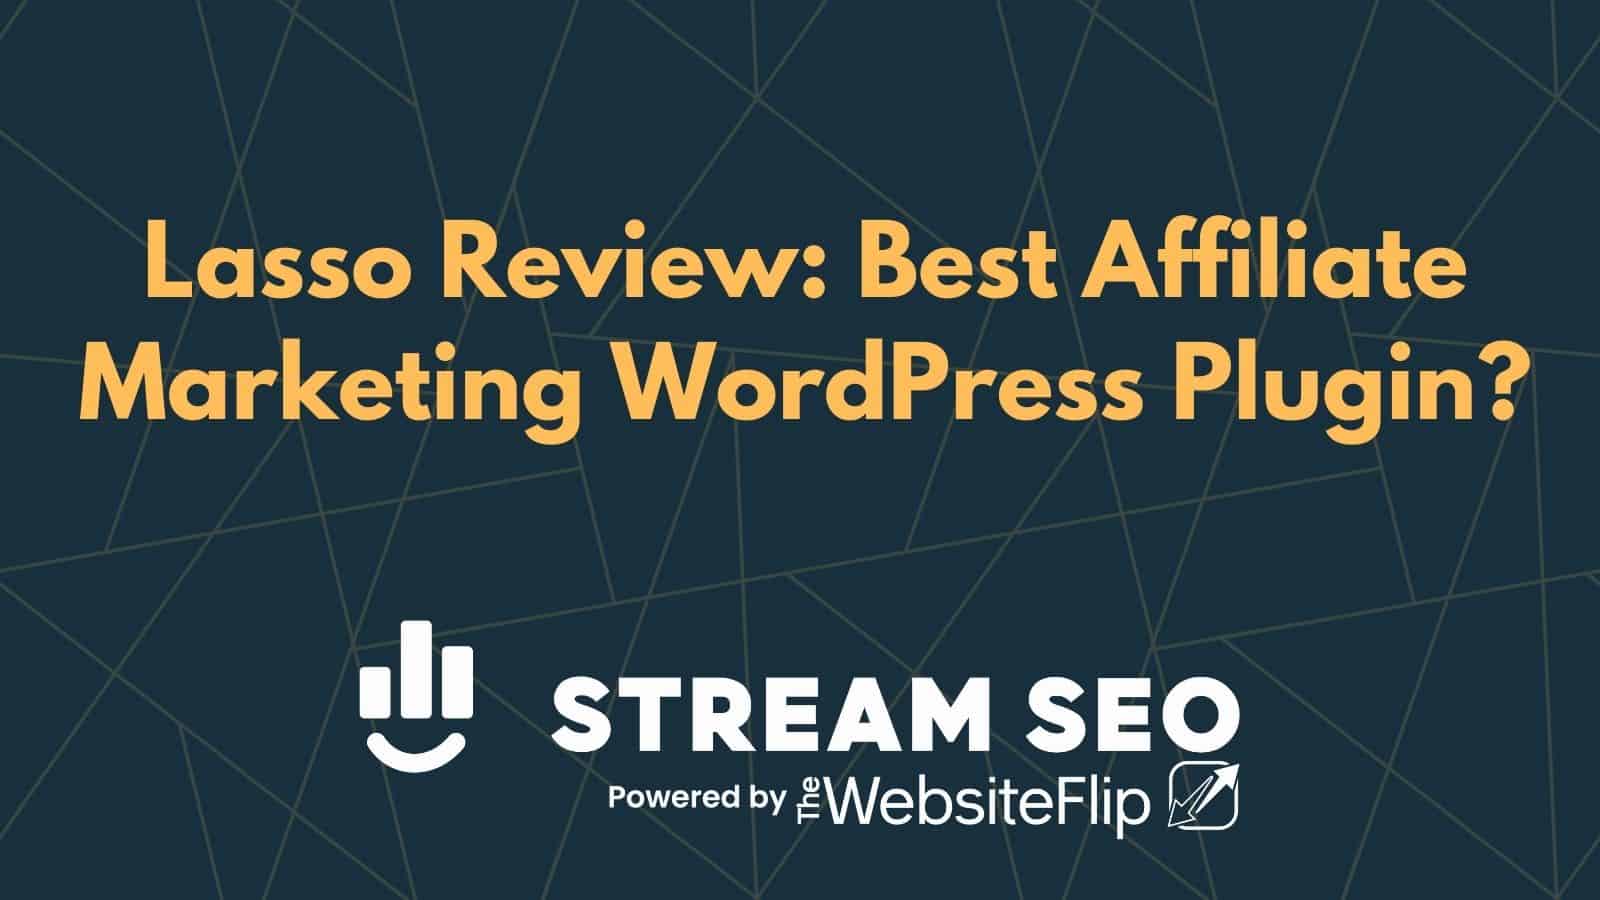 Lasso Review: Best Affiliate Marketing WordPress Plugin?